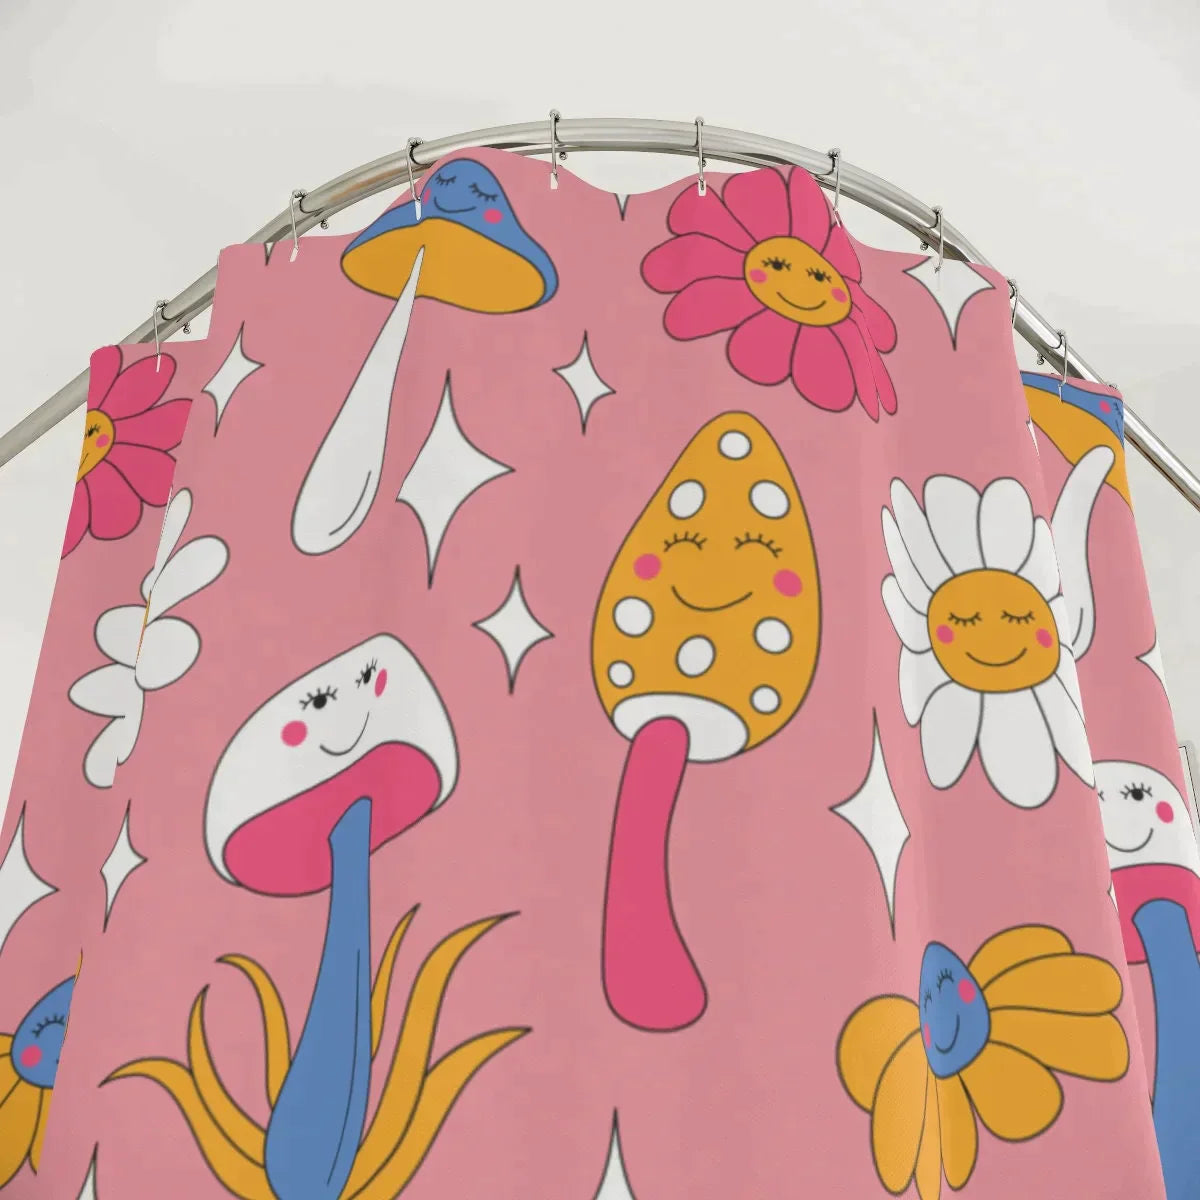 Boho Shower Curtain, Bobo Pink Mushroom Curtain, Daisy Bathroom Accessories, Housewarming Gift, Hippie Decor, Extra Long Shower Curtain